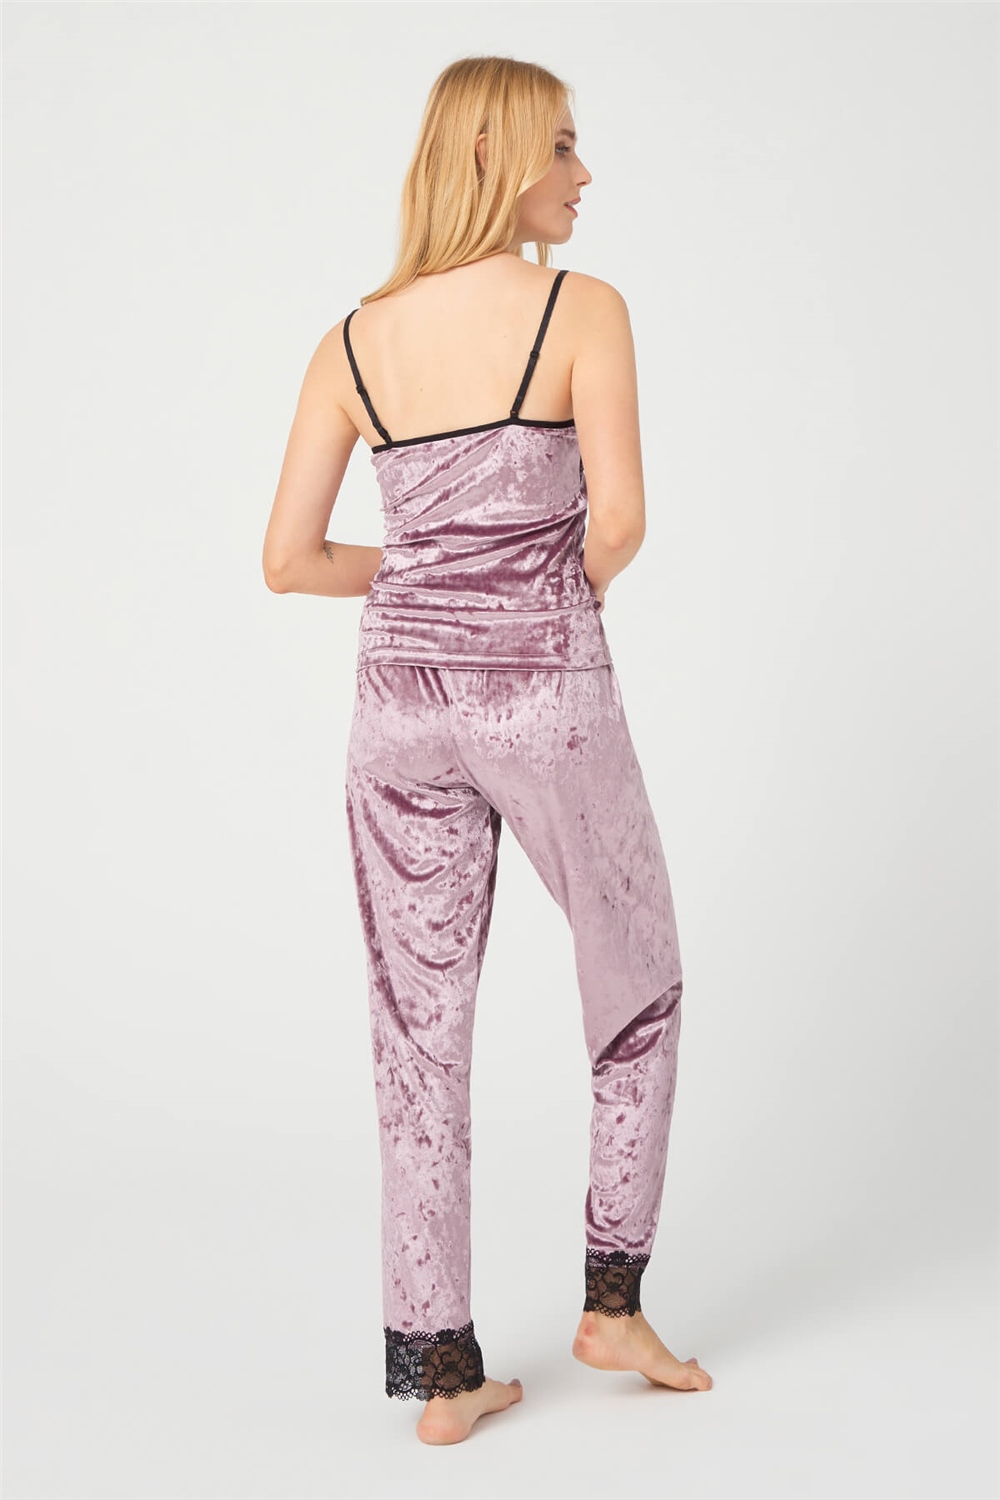 velvet-pajama-set-with-lace-detail-ch1500-powder-1-1